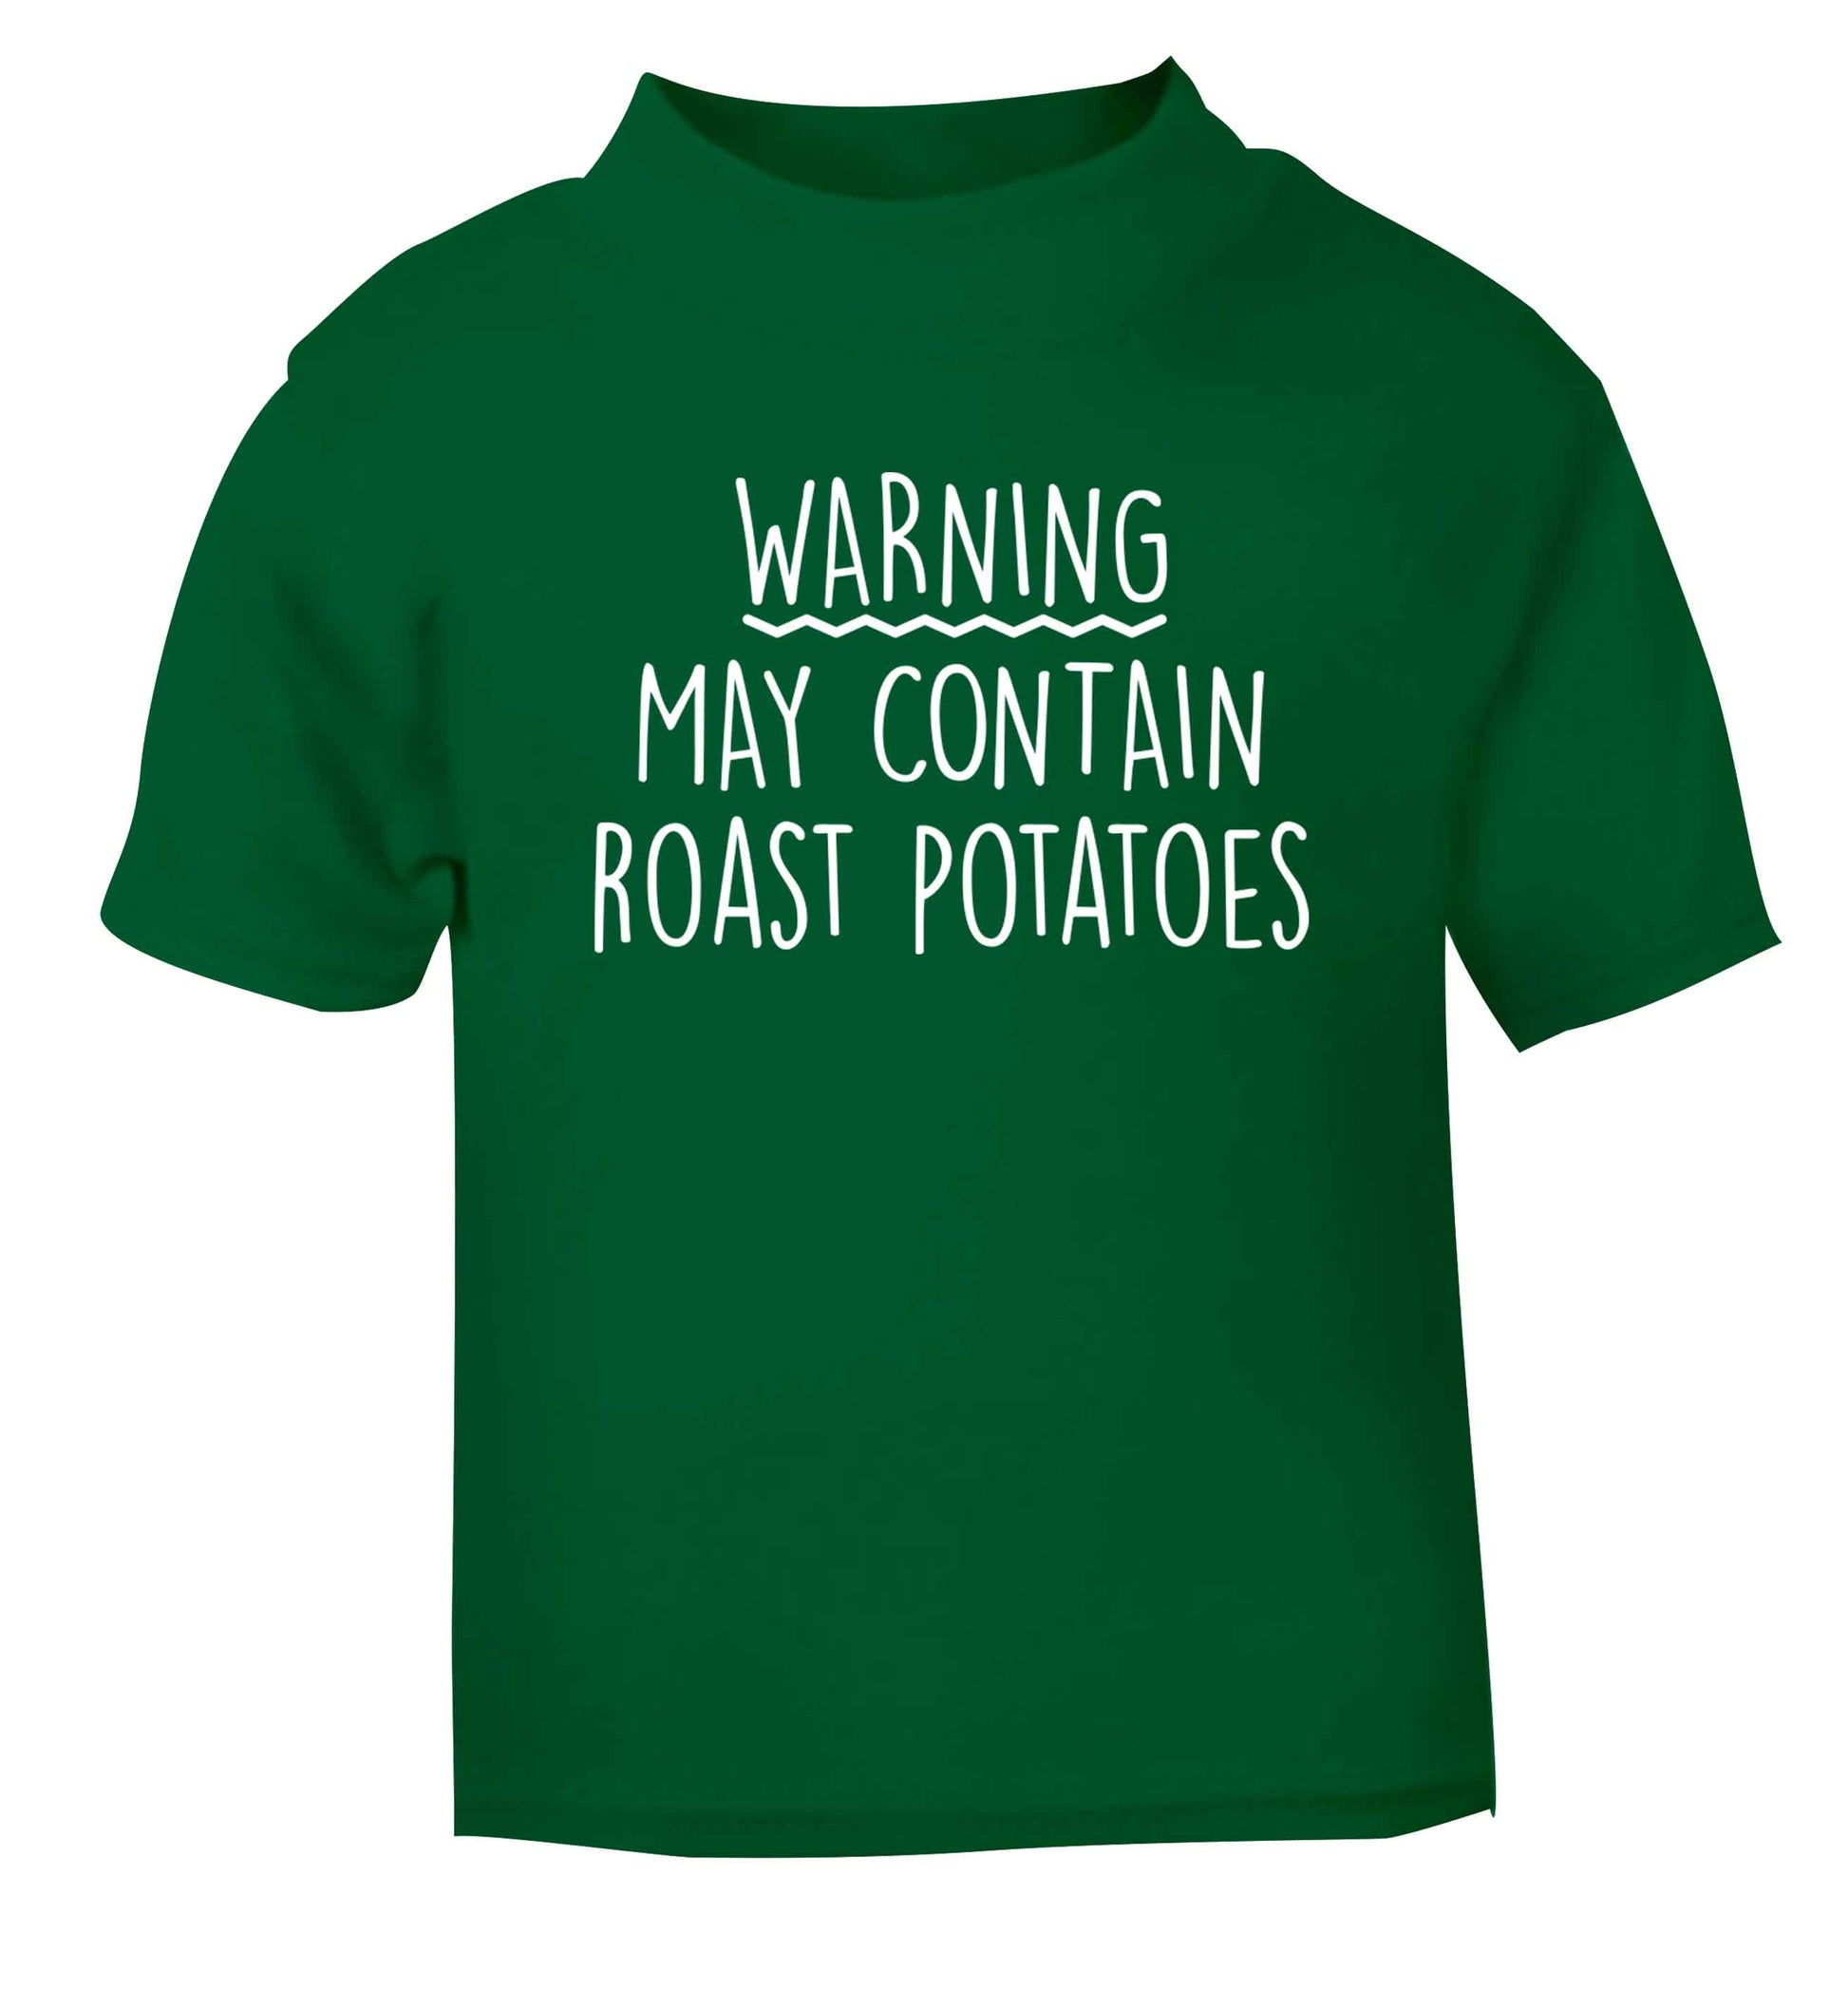 Warning may containg roast potatoes green baby toddler Tshirt 2 Years